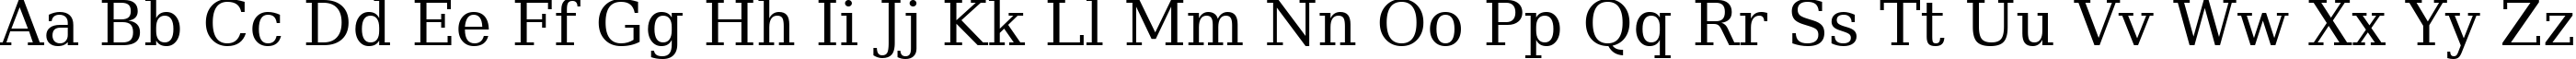 Пример написания английского алфавита шрифтом ae_Hor